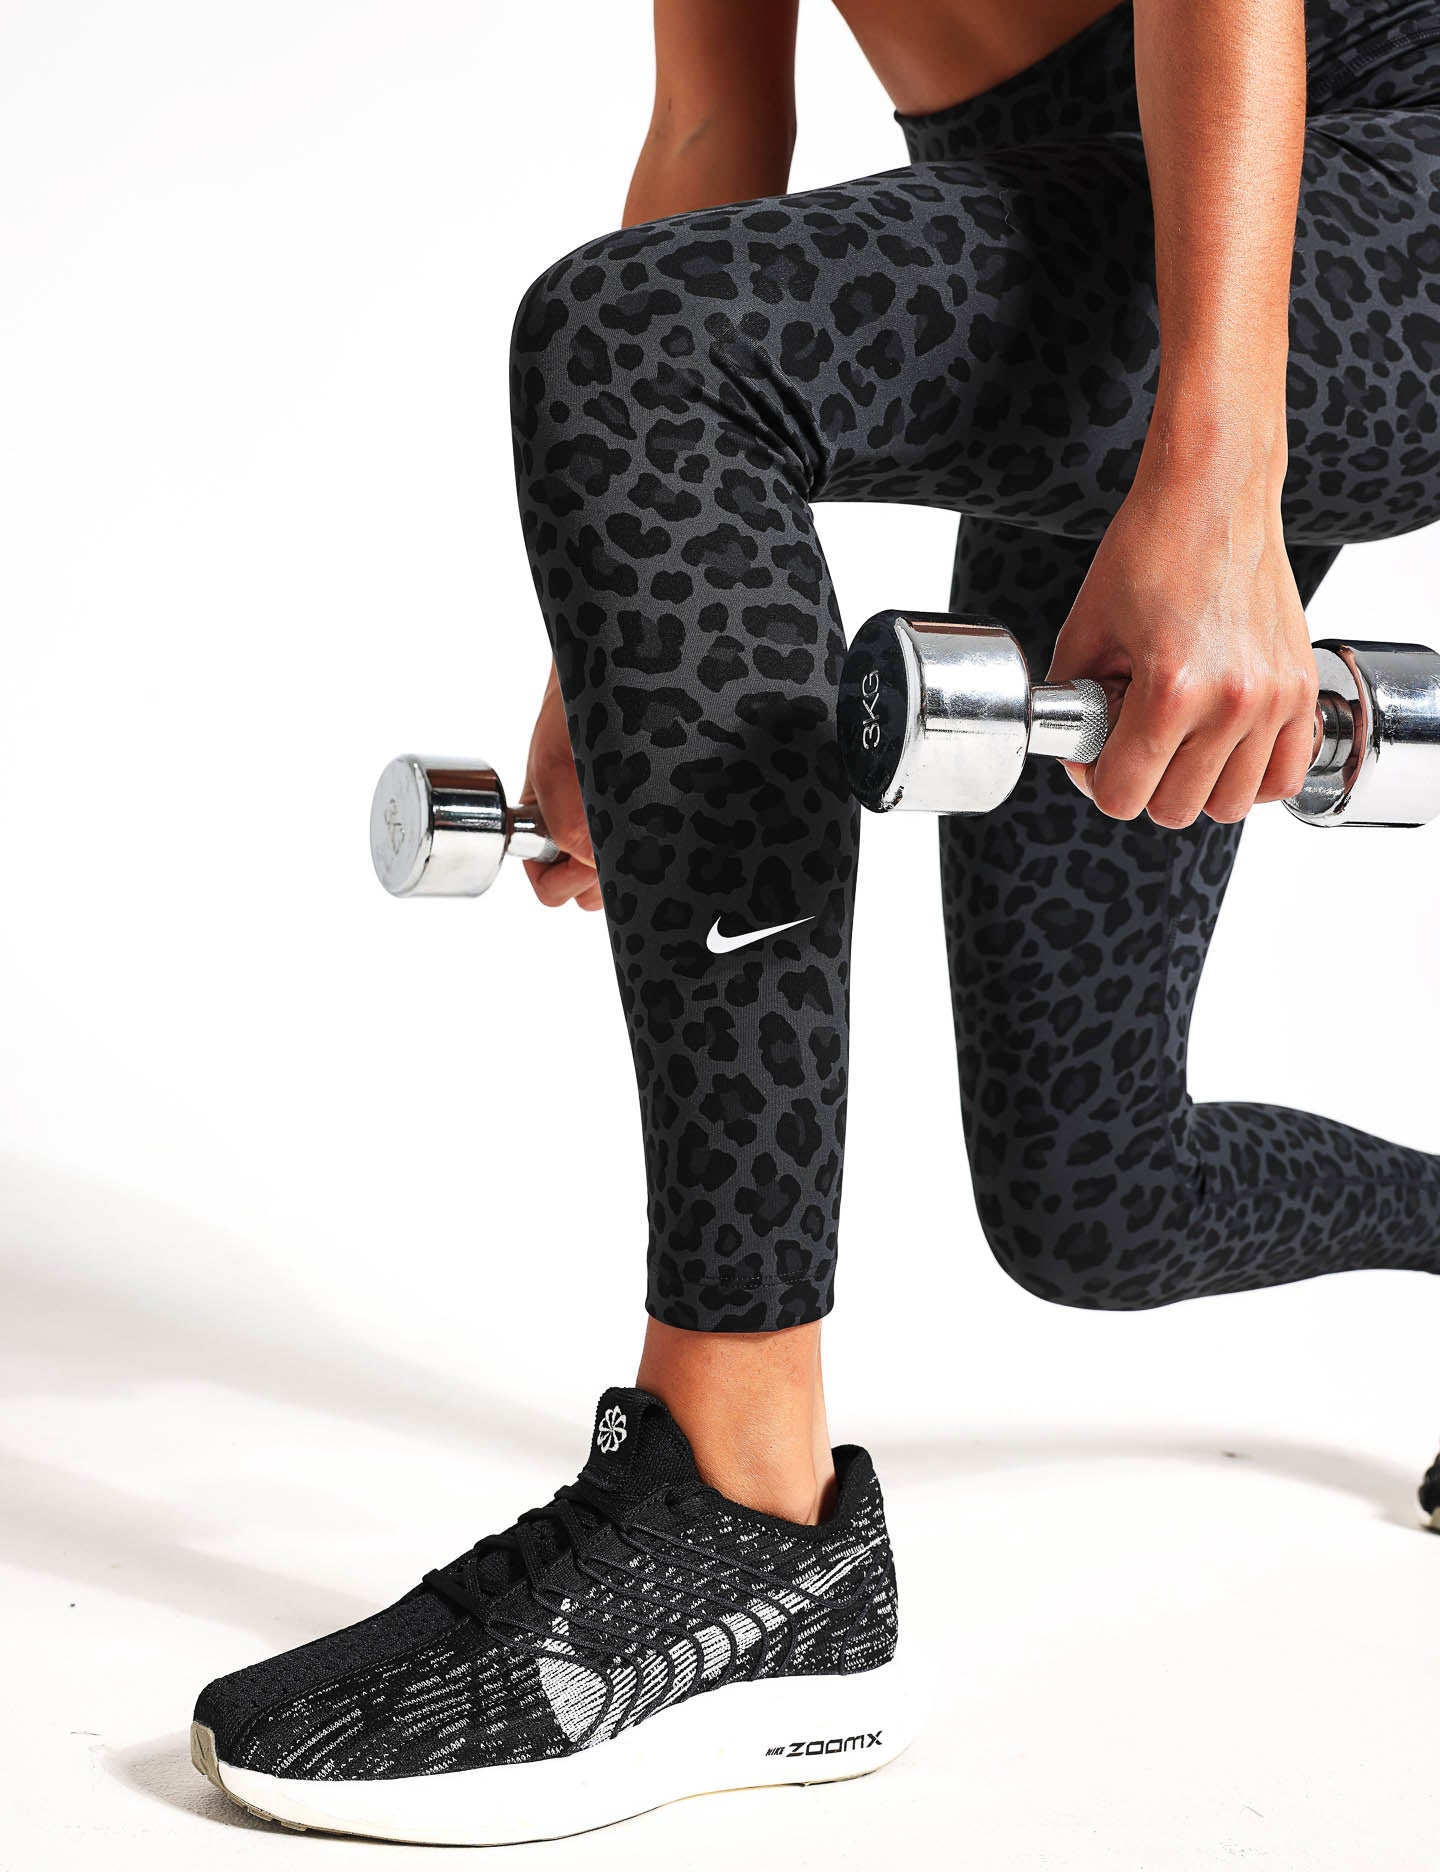 Nike Training One Dri-FIT high rise leopard print leggings in brown